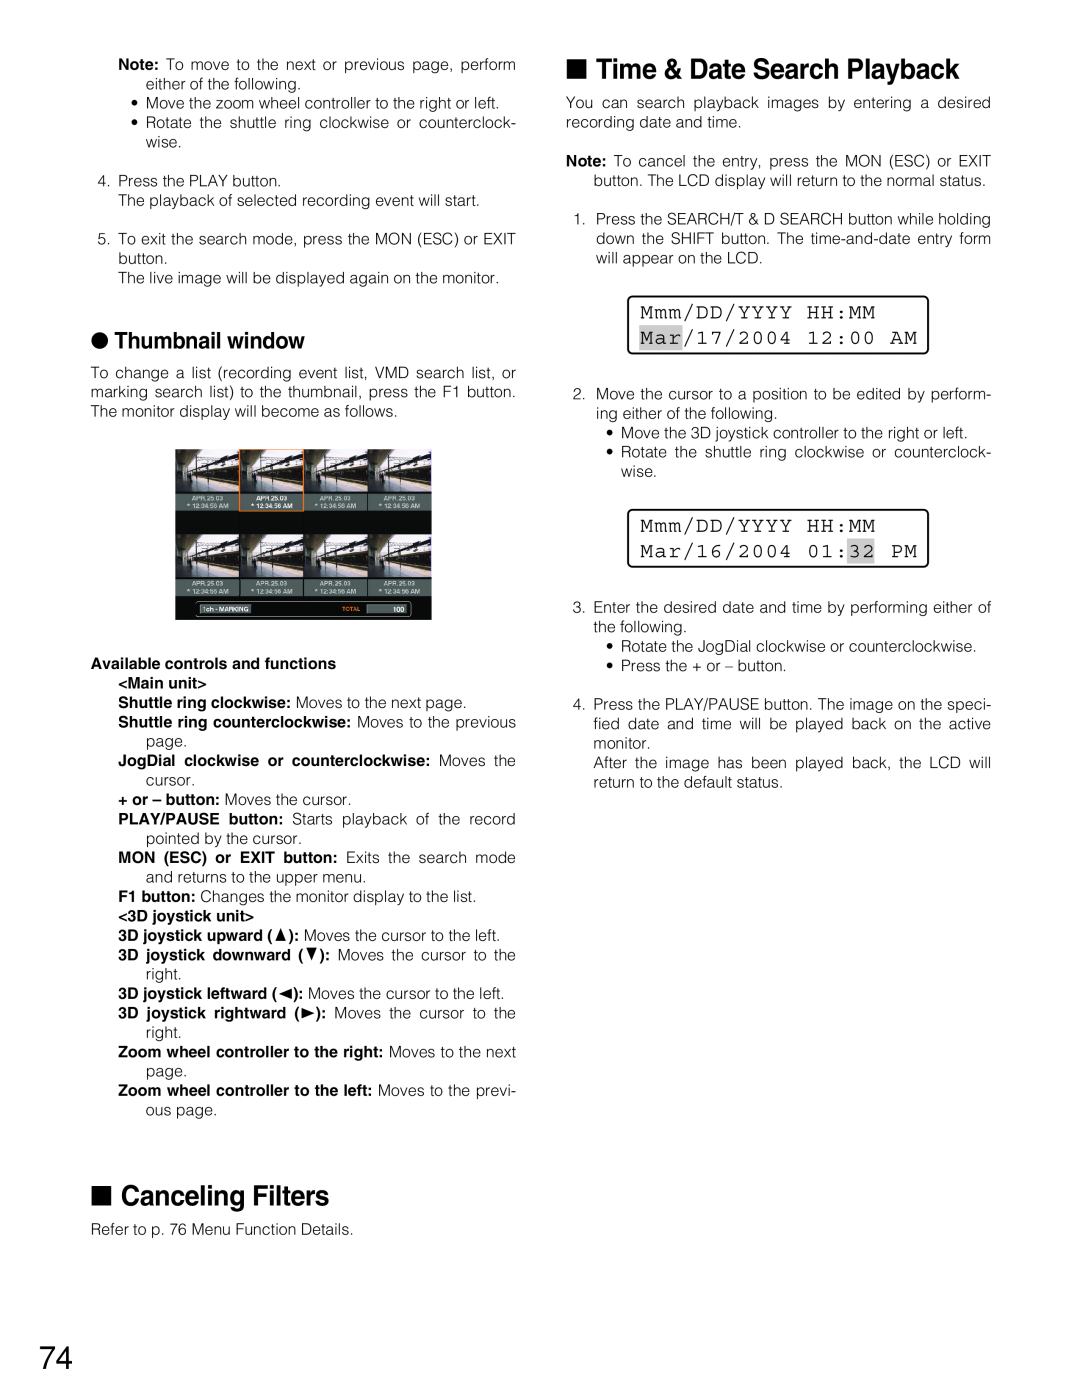 Panasonic WJ-MPU955A manual Canceling Filters, Time & Date Search Playback, Thumbnail window 